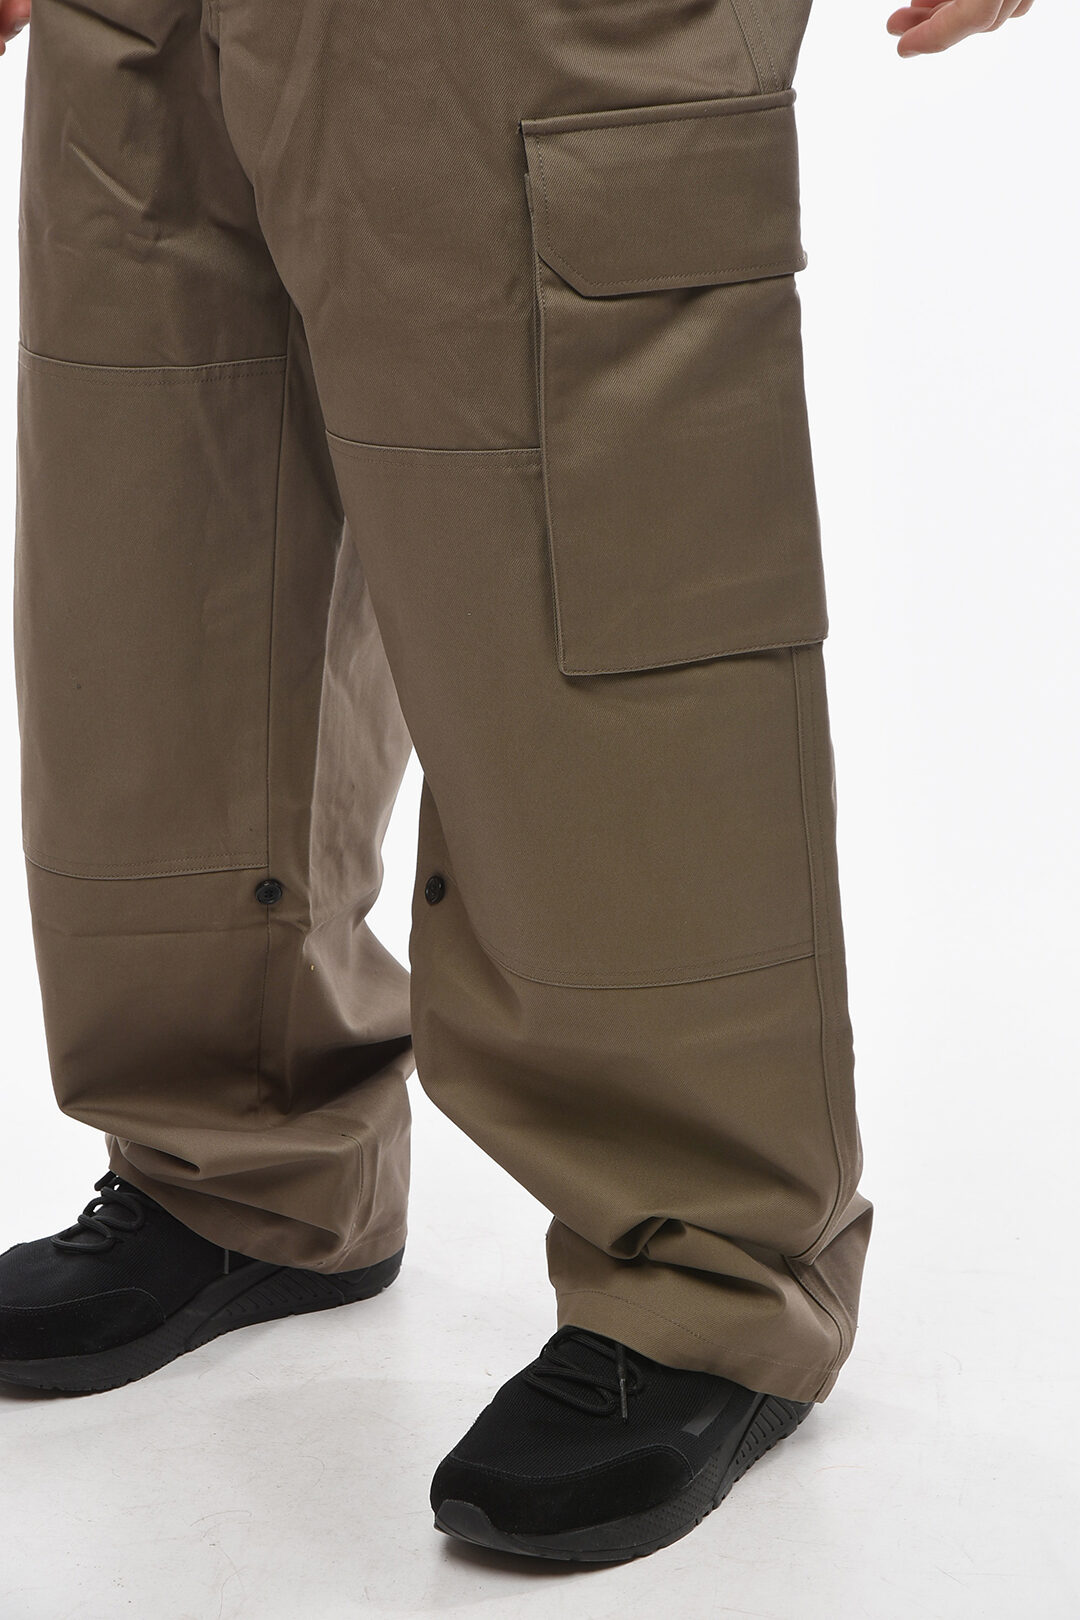 BAPE: Beige Relaxed-Fit Cargo Pants | SSENSE